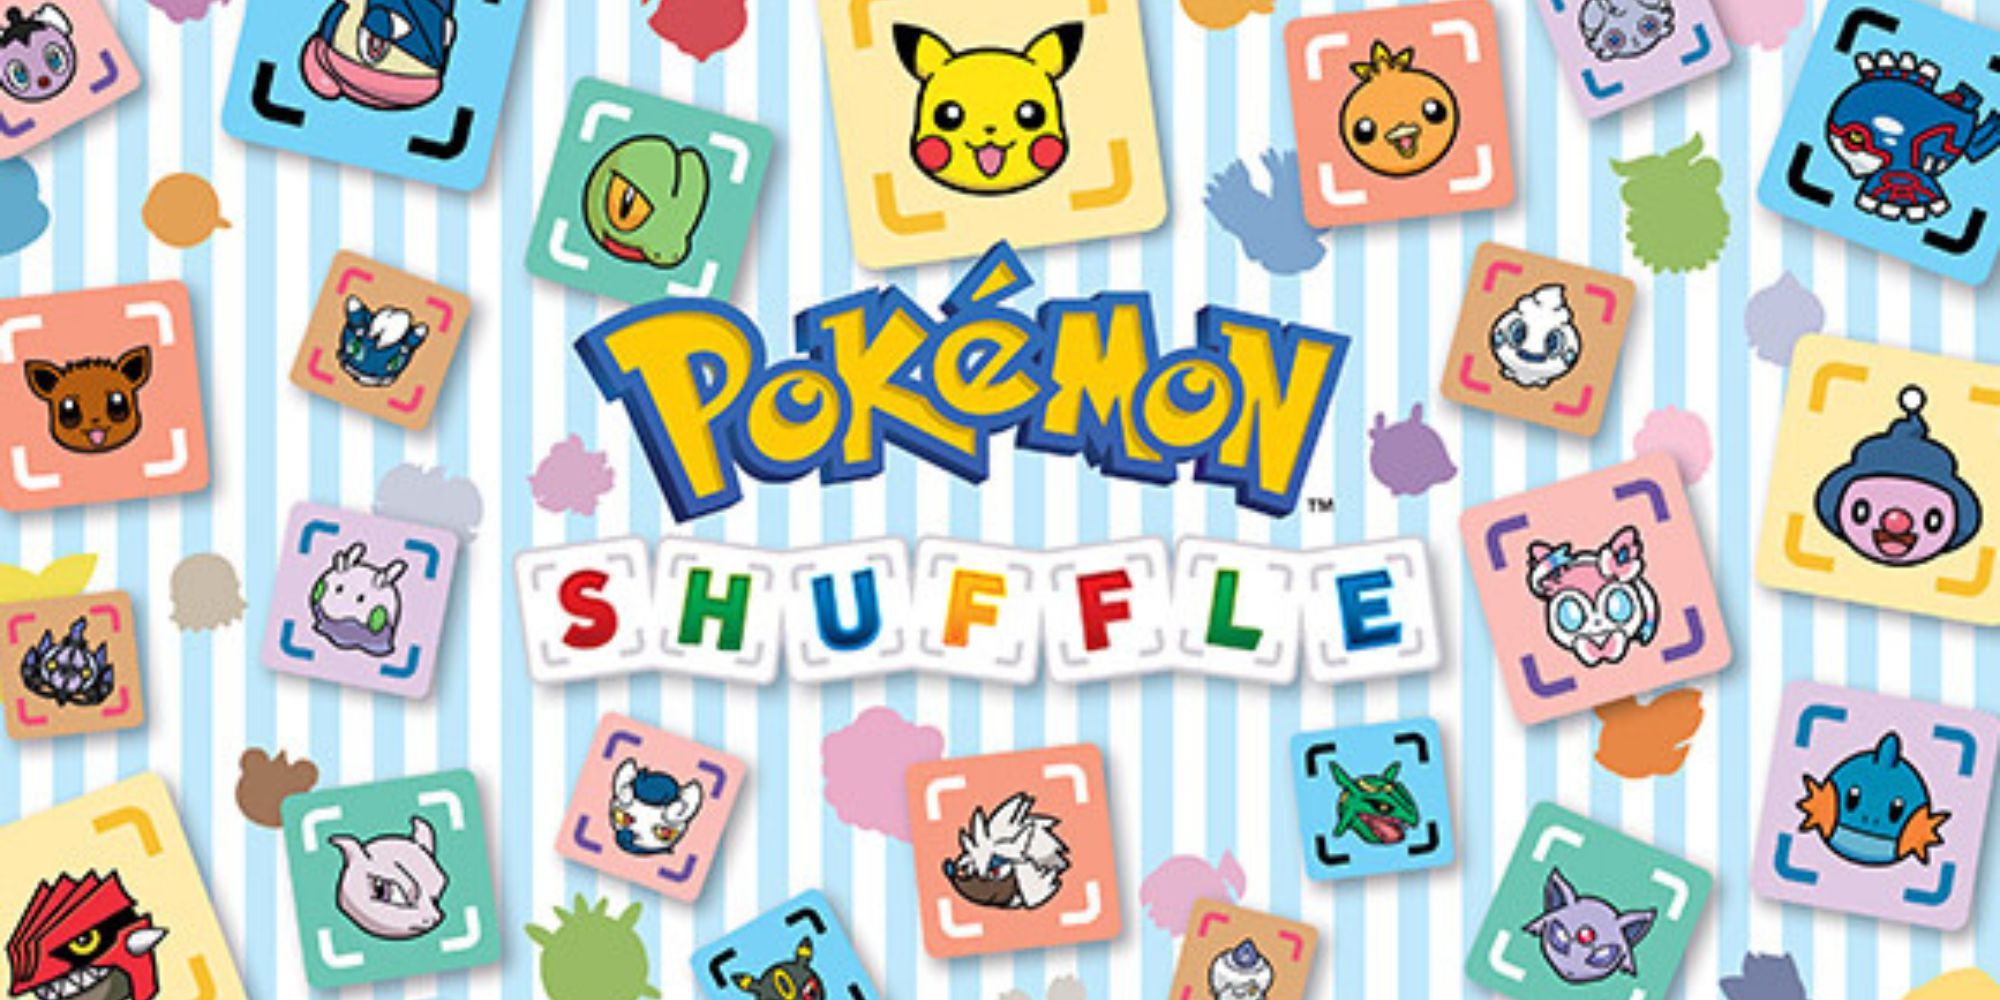 The Pokemon Shuffle Mobile logo